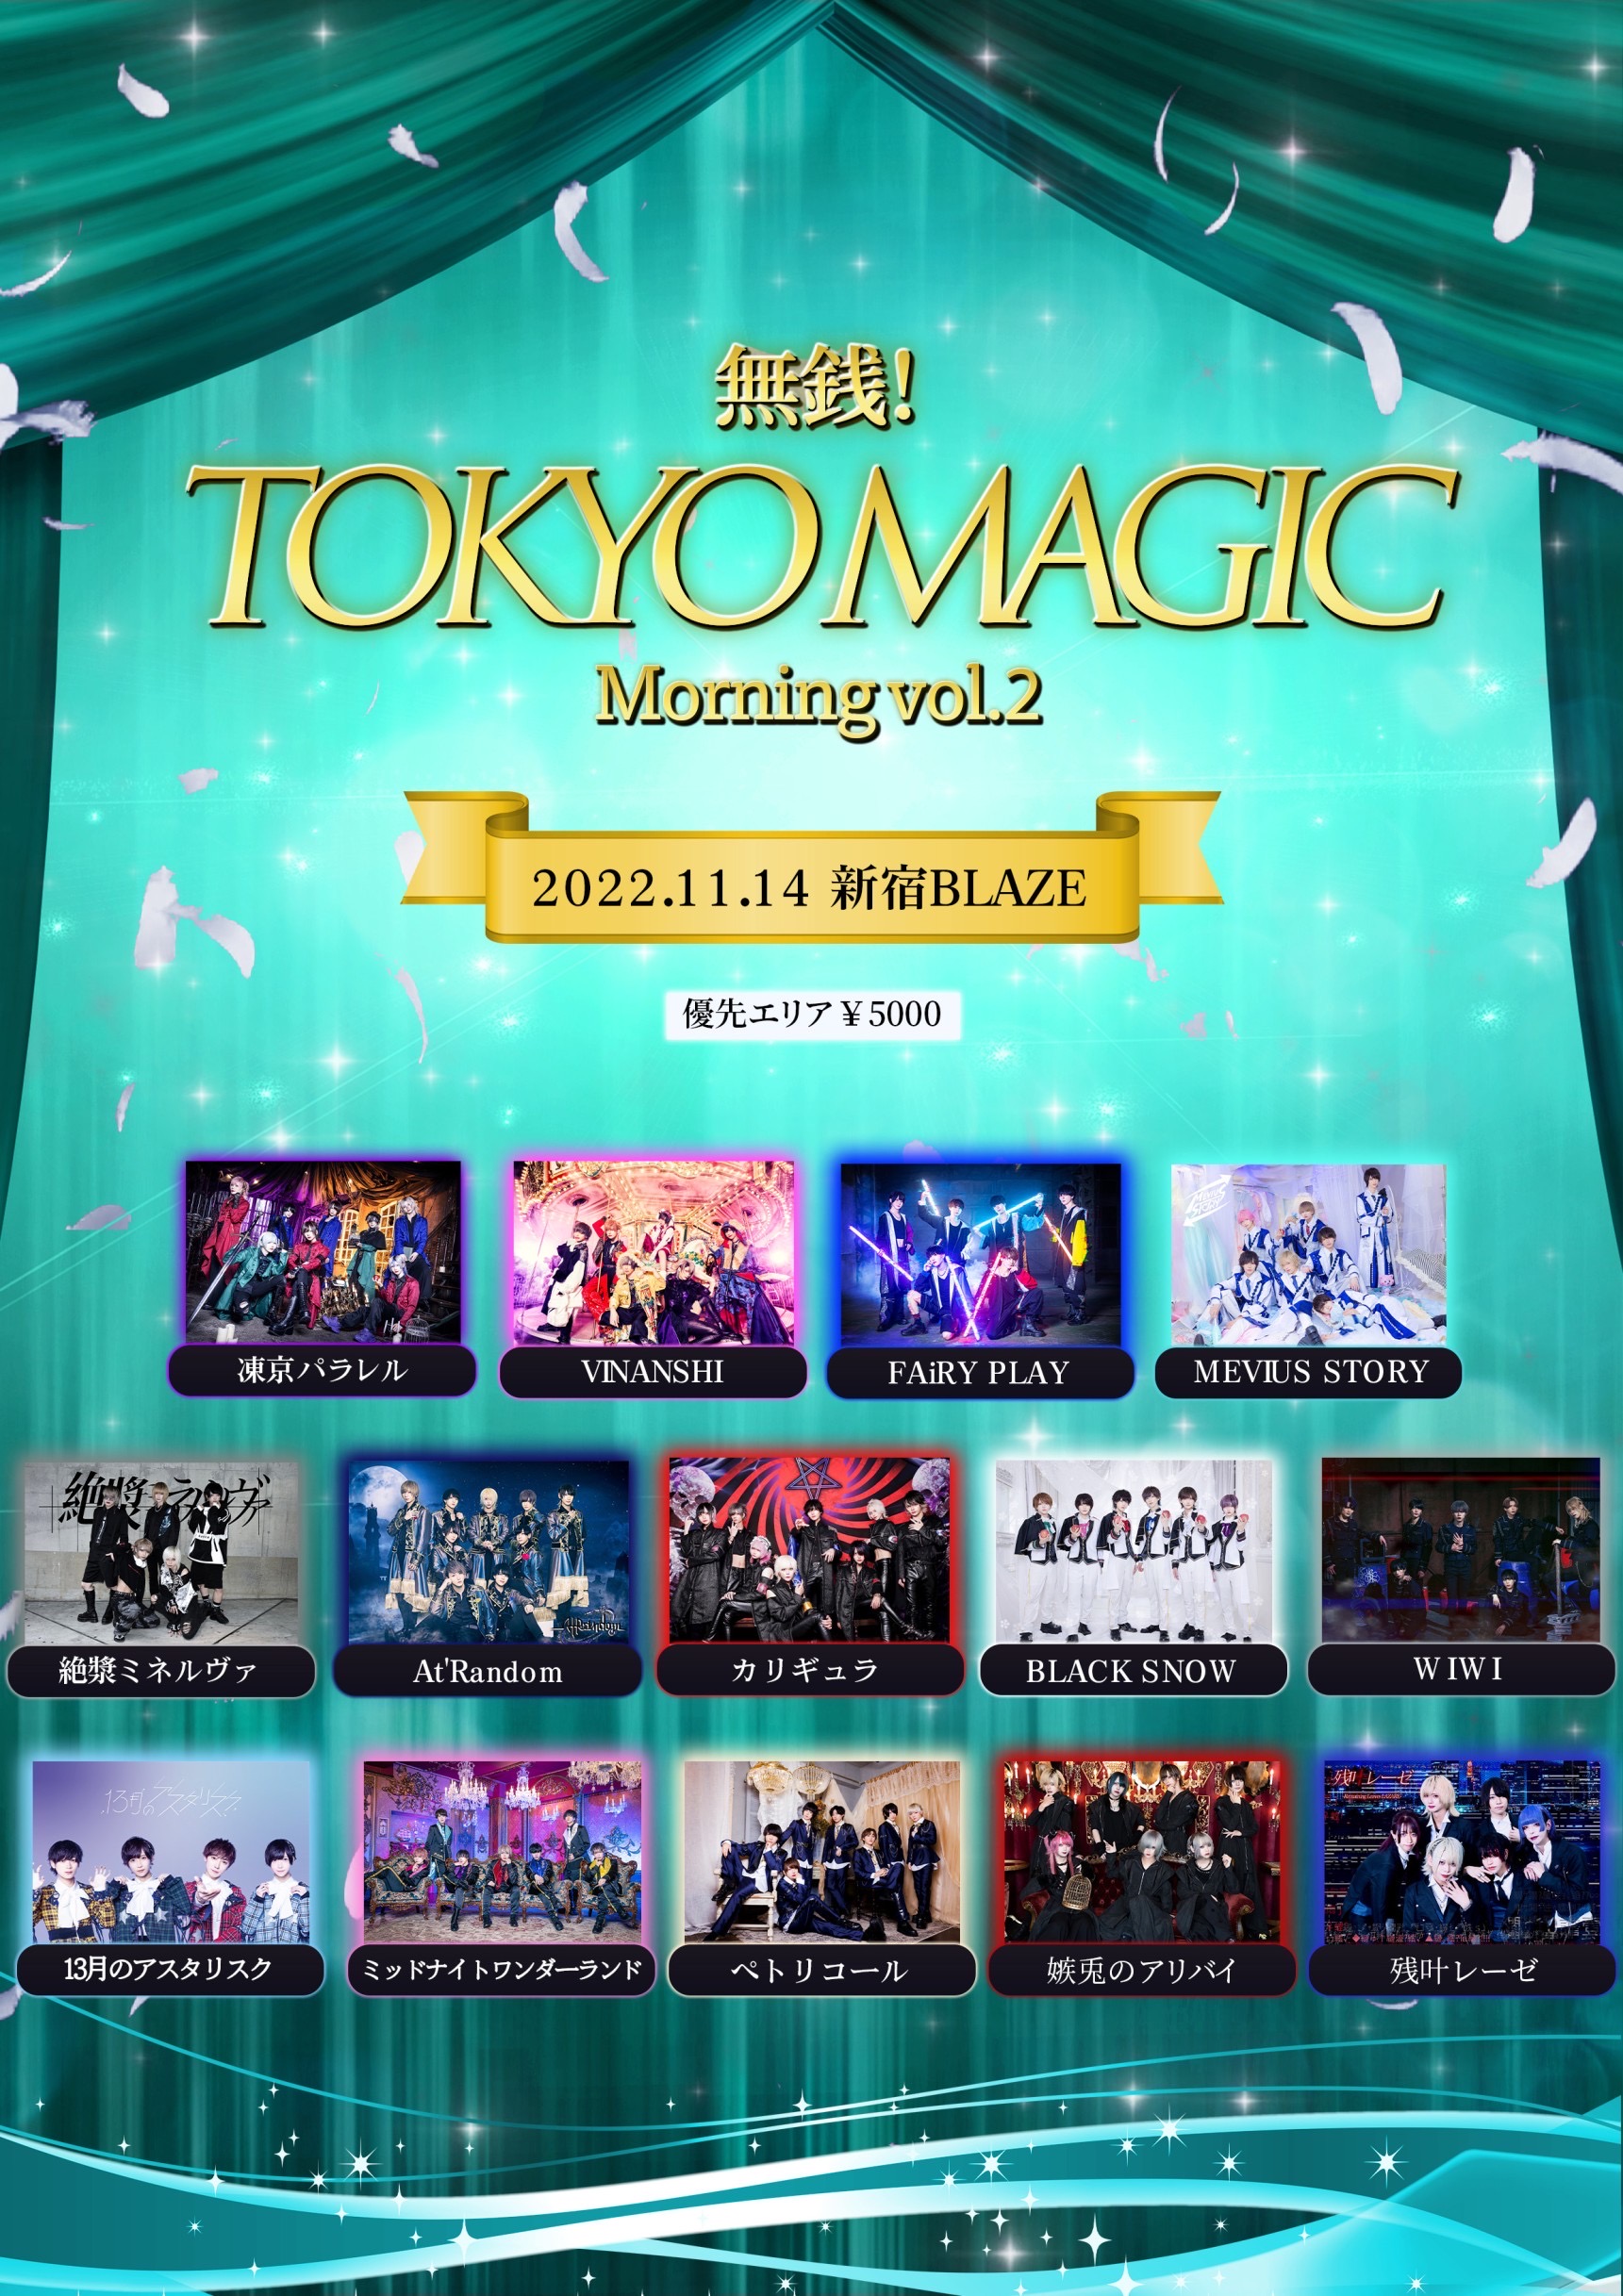 TOKYO MAGIC Morning vol.2